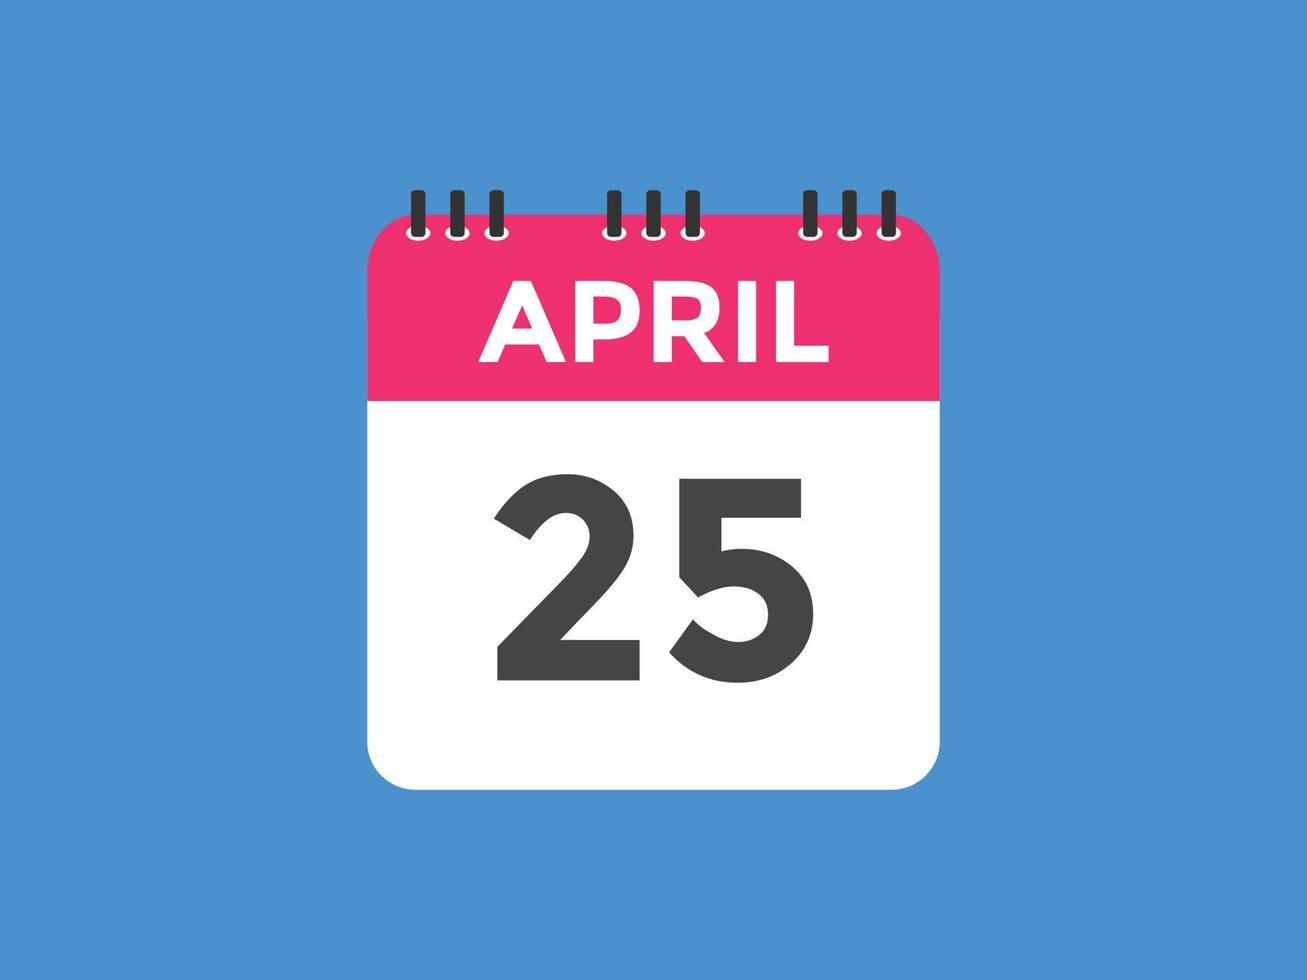 april 25 calendar reminder. 25th april daily calendar icon template. Calendar 25th april icon Design template. Vector illustration